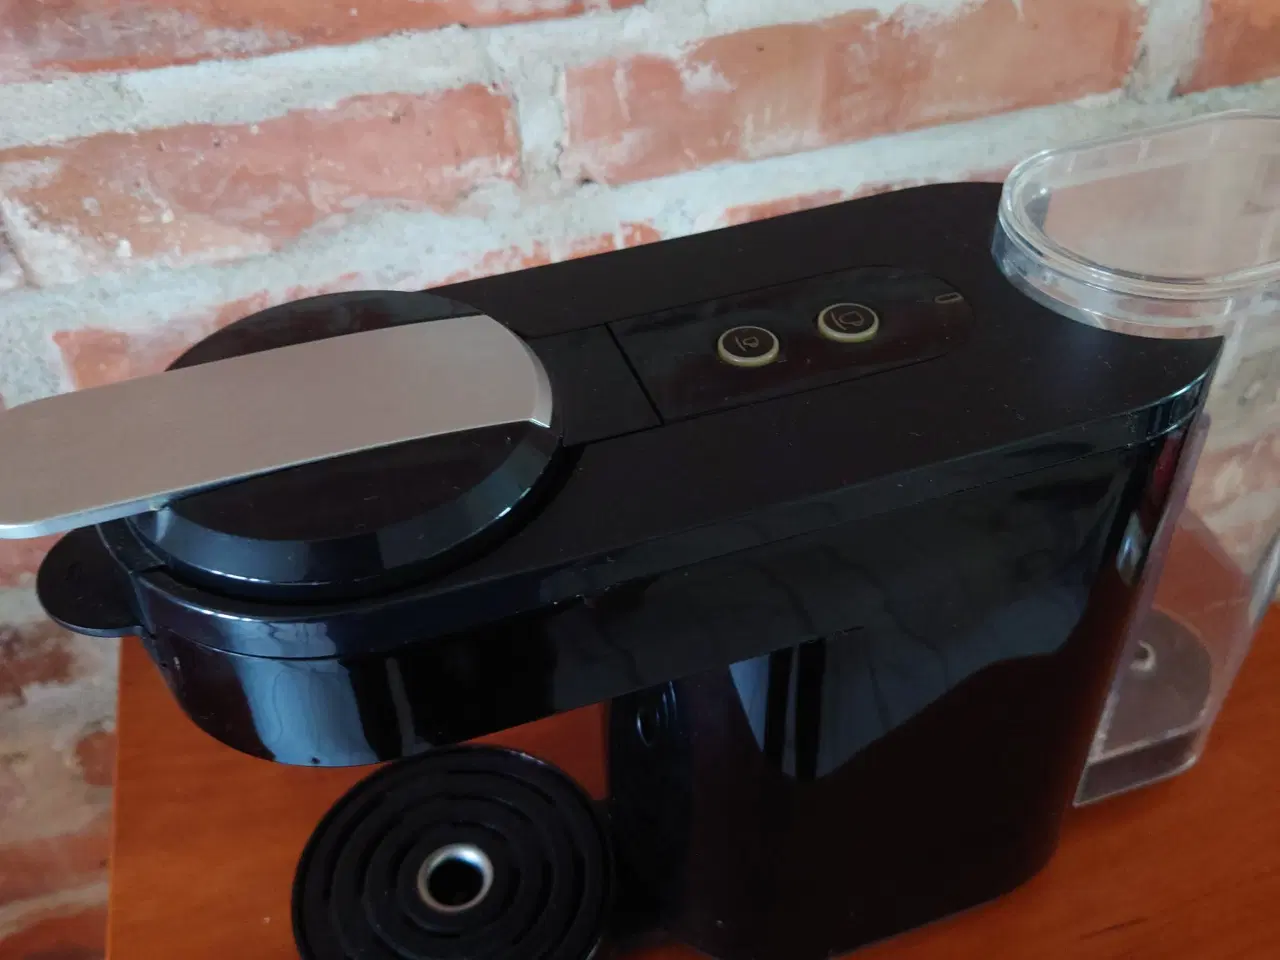 Billede 2 - Praktisk lille kaffemaskine fra Nespresso